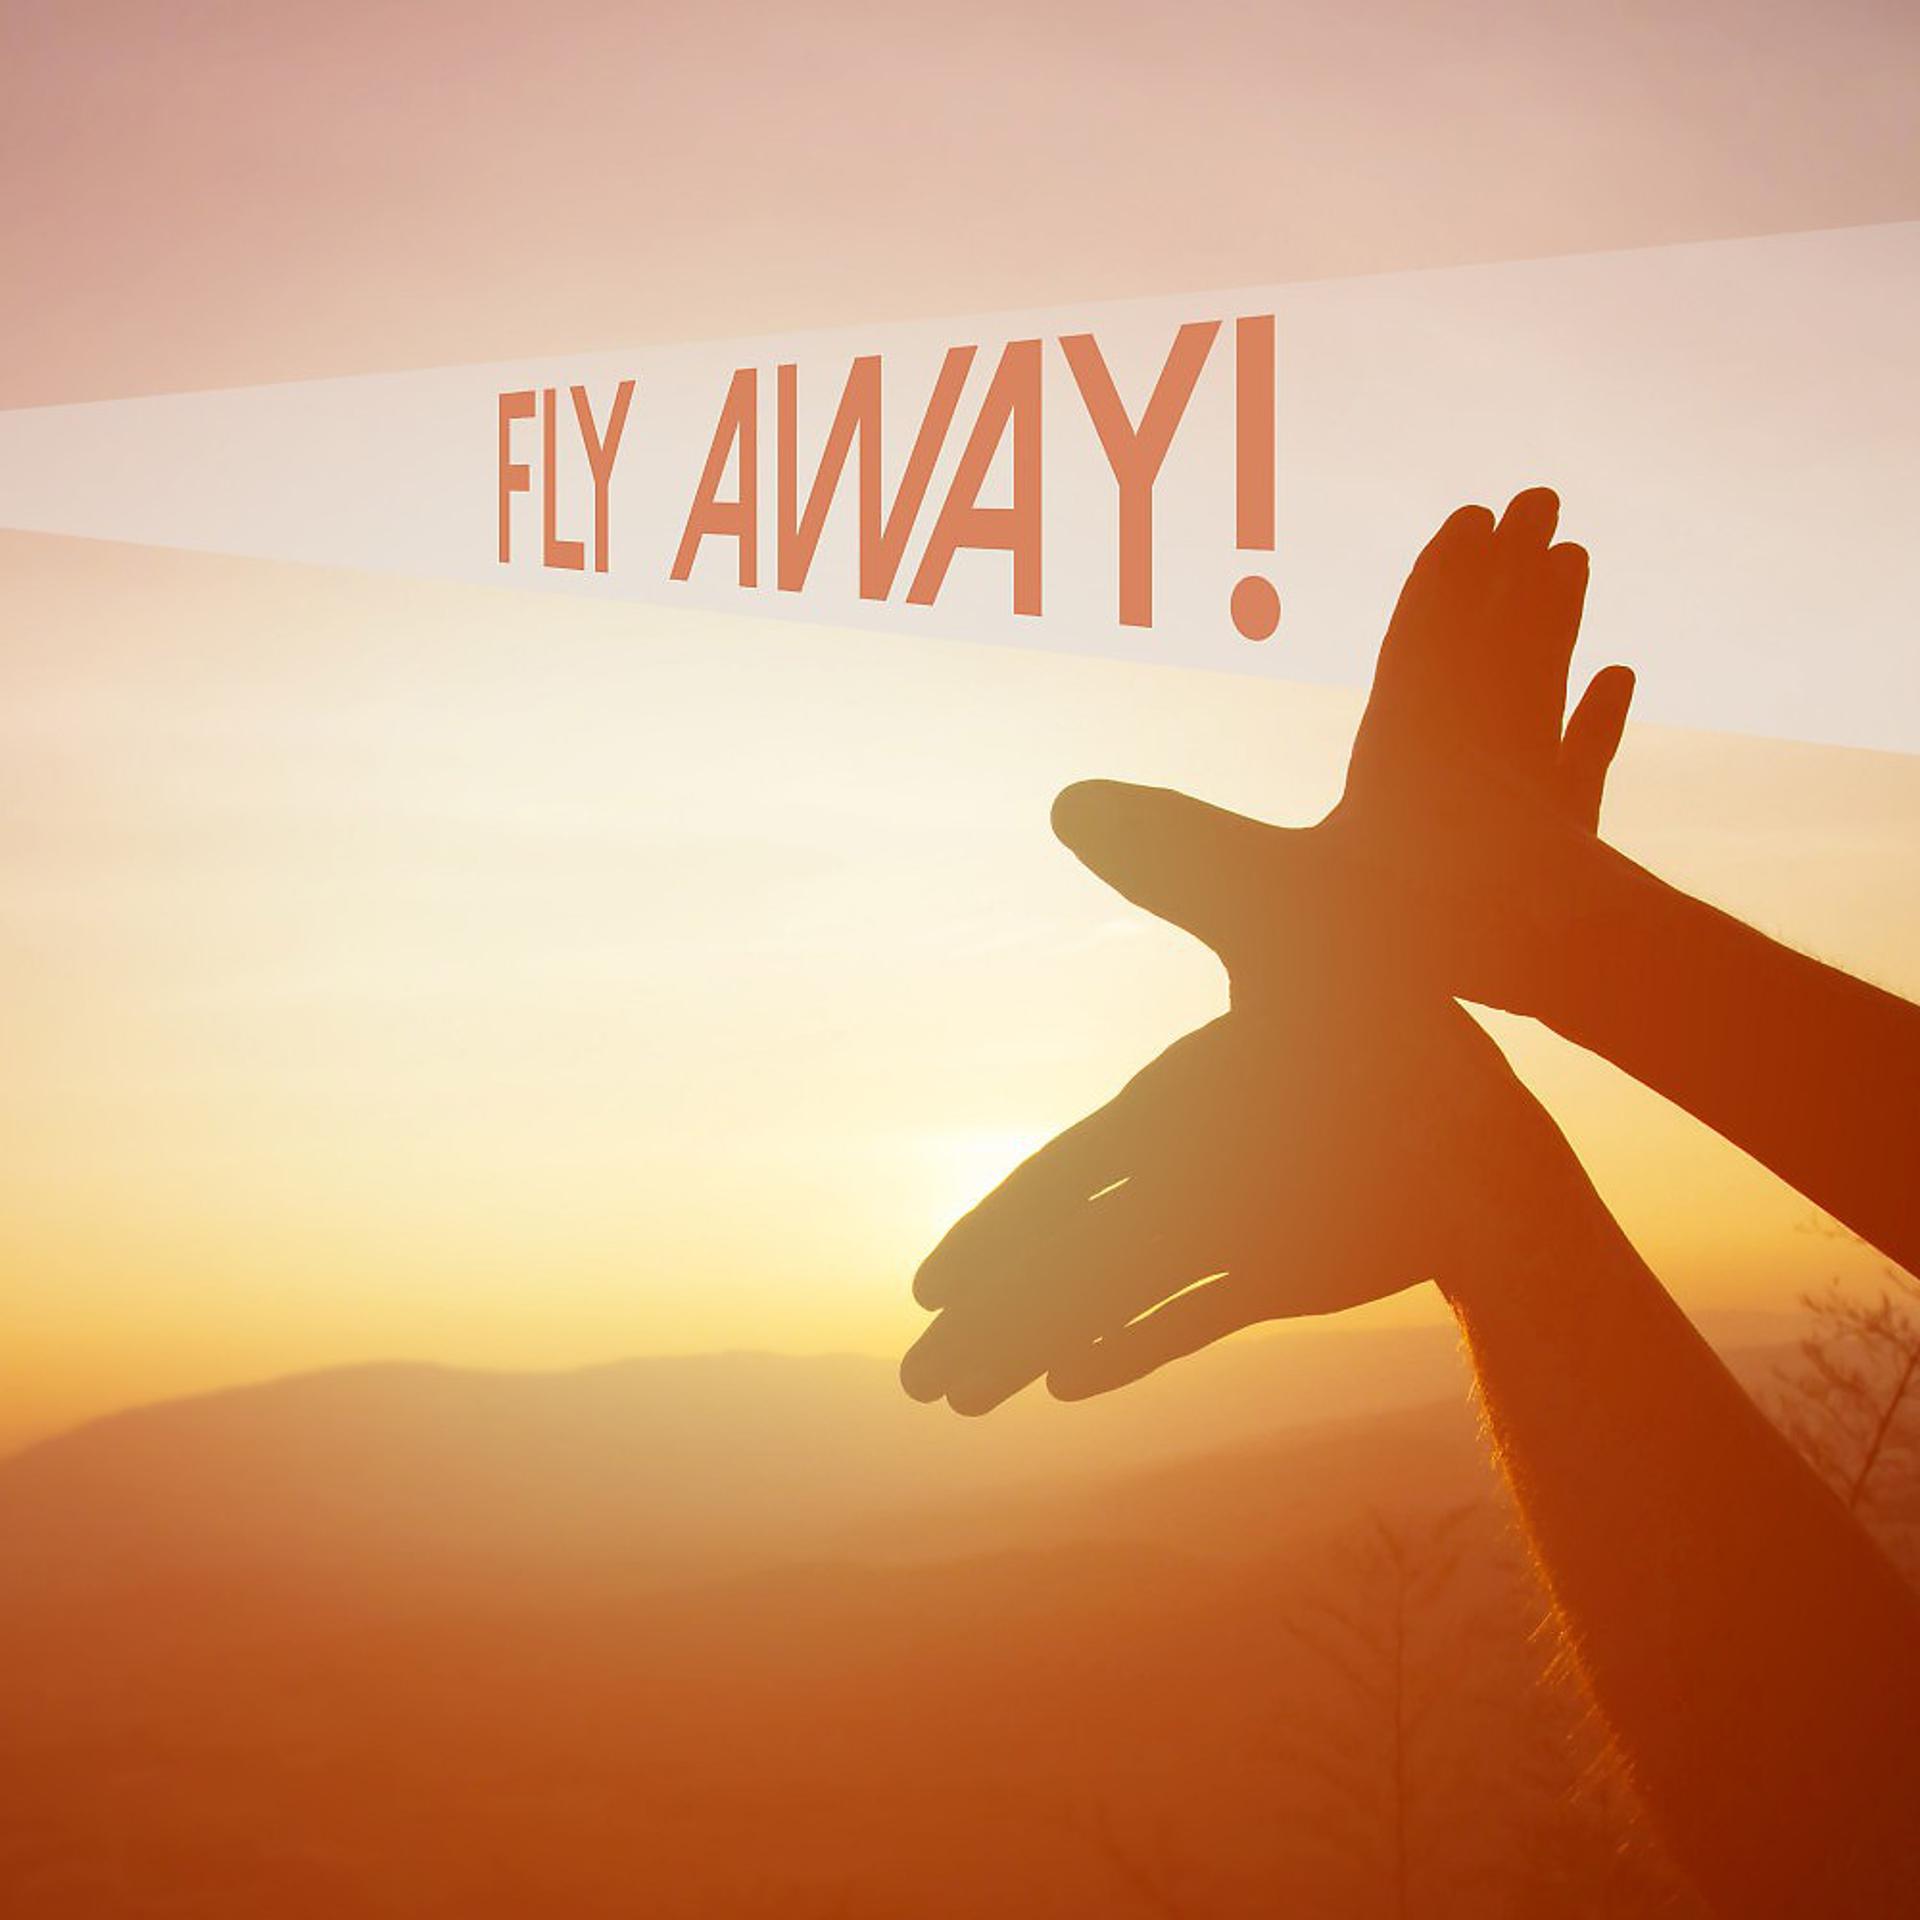 Гоу эвэй. Fly away. Fly away фото. Flying away. Картинка good Moov Fly away.